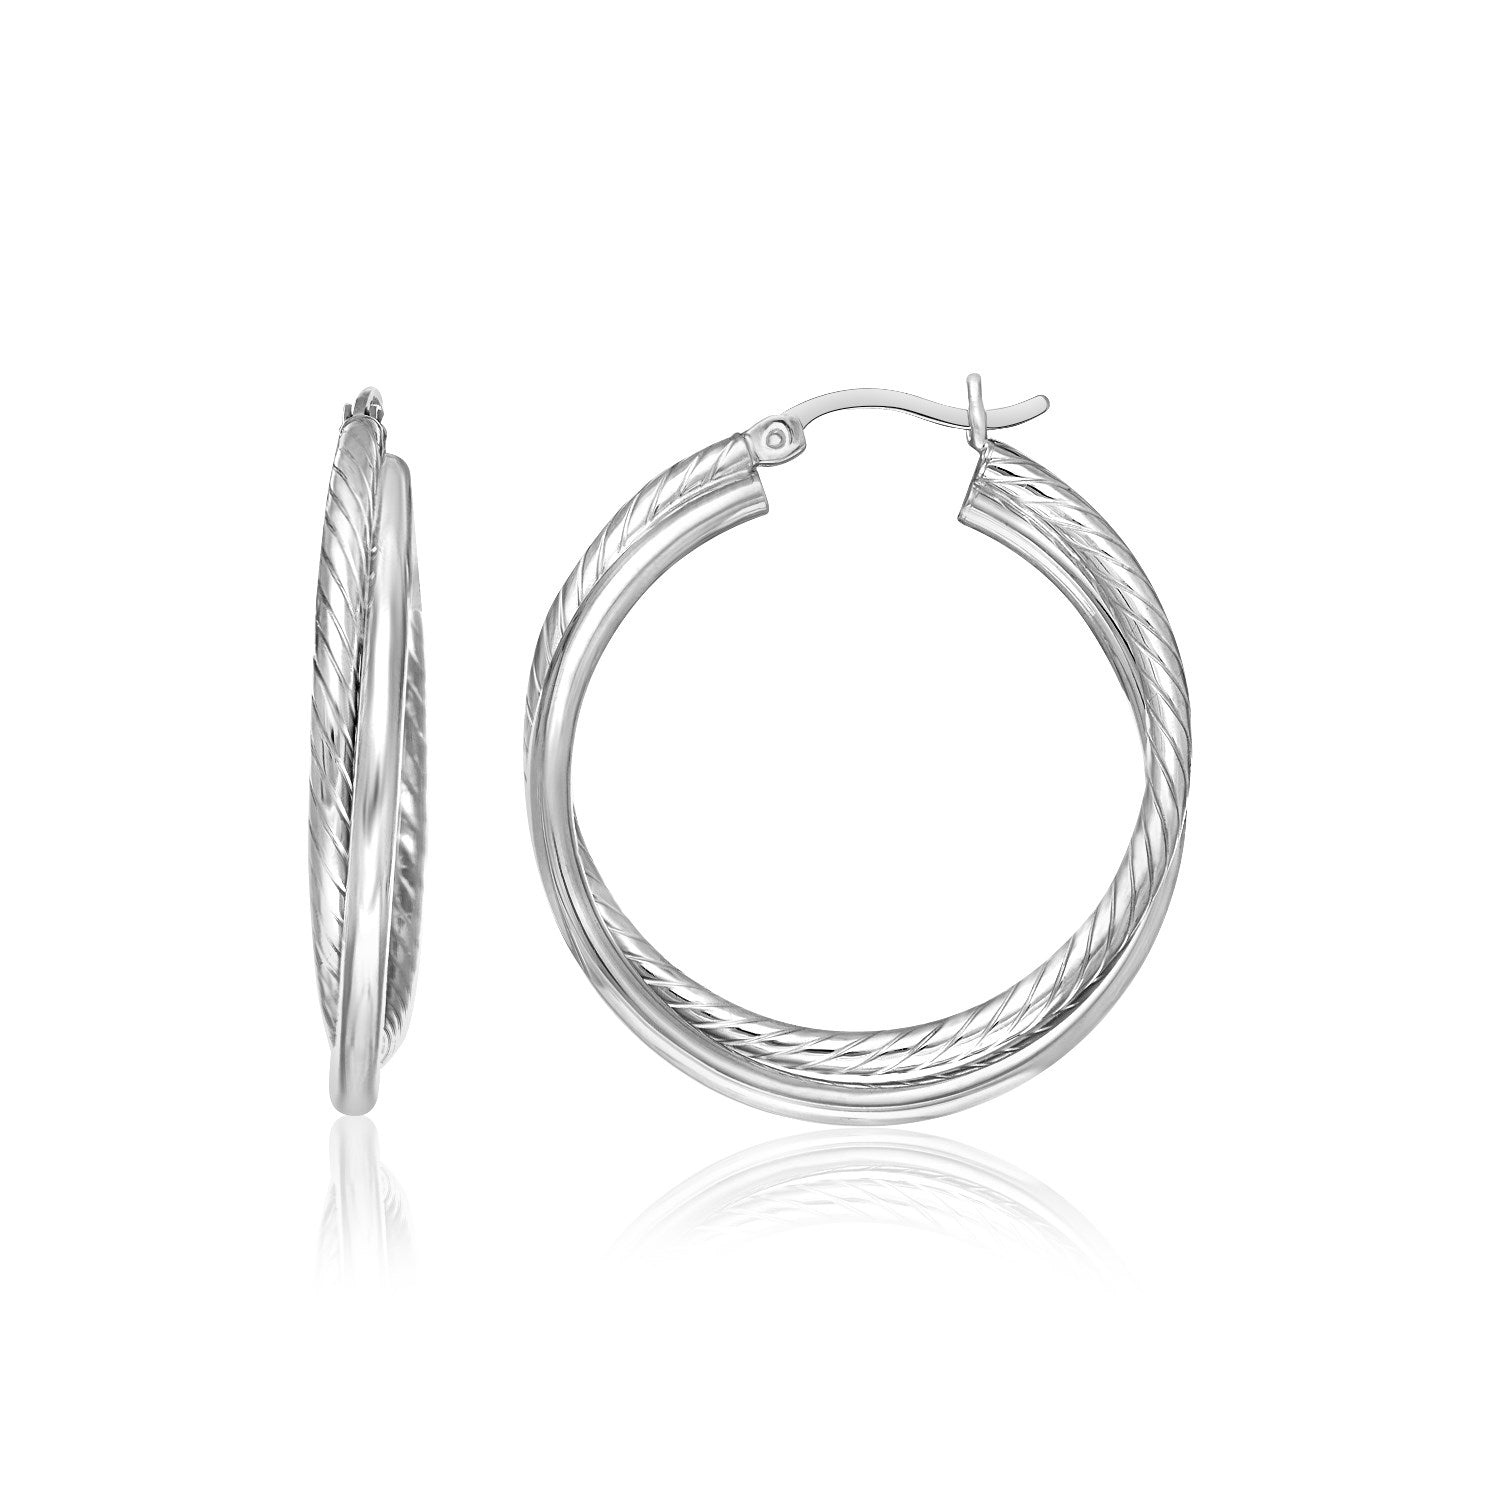 Sterling Silver Ridged Hoop Earrings with Textured Design